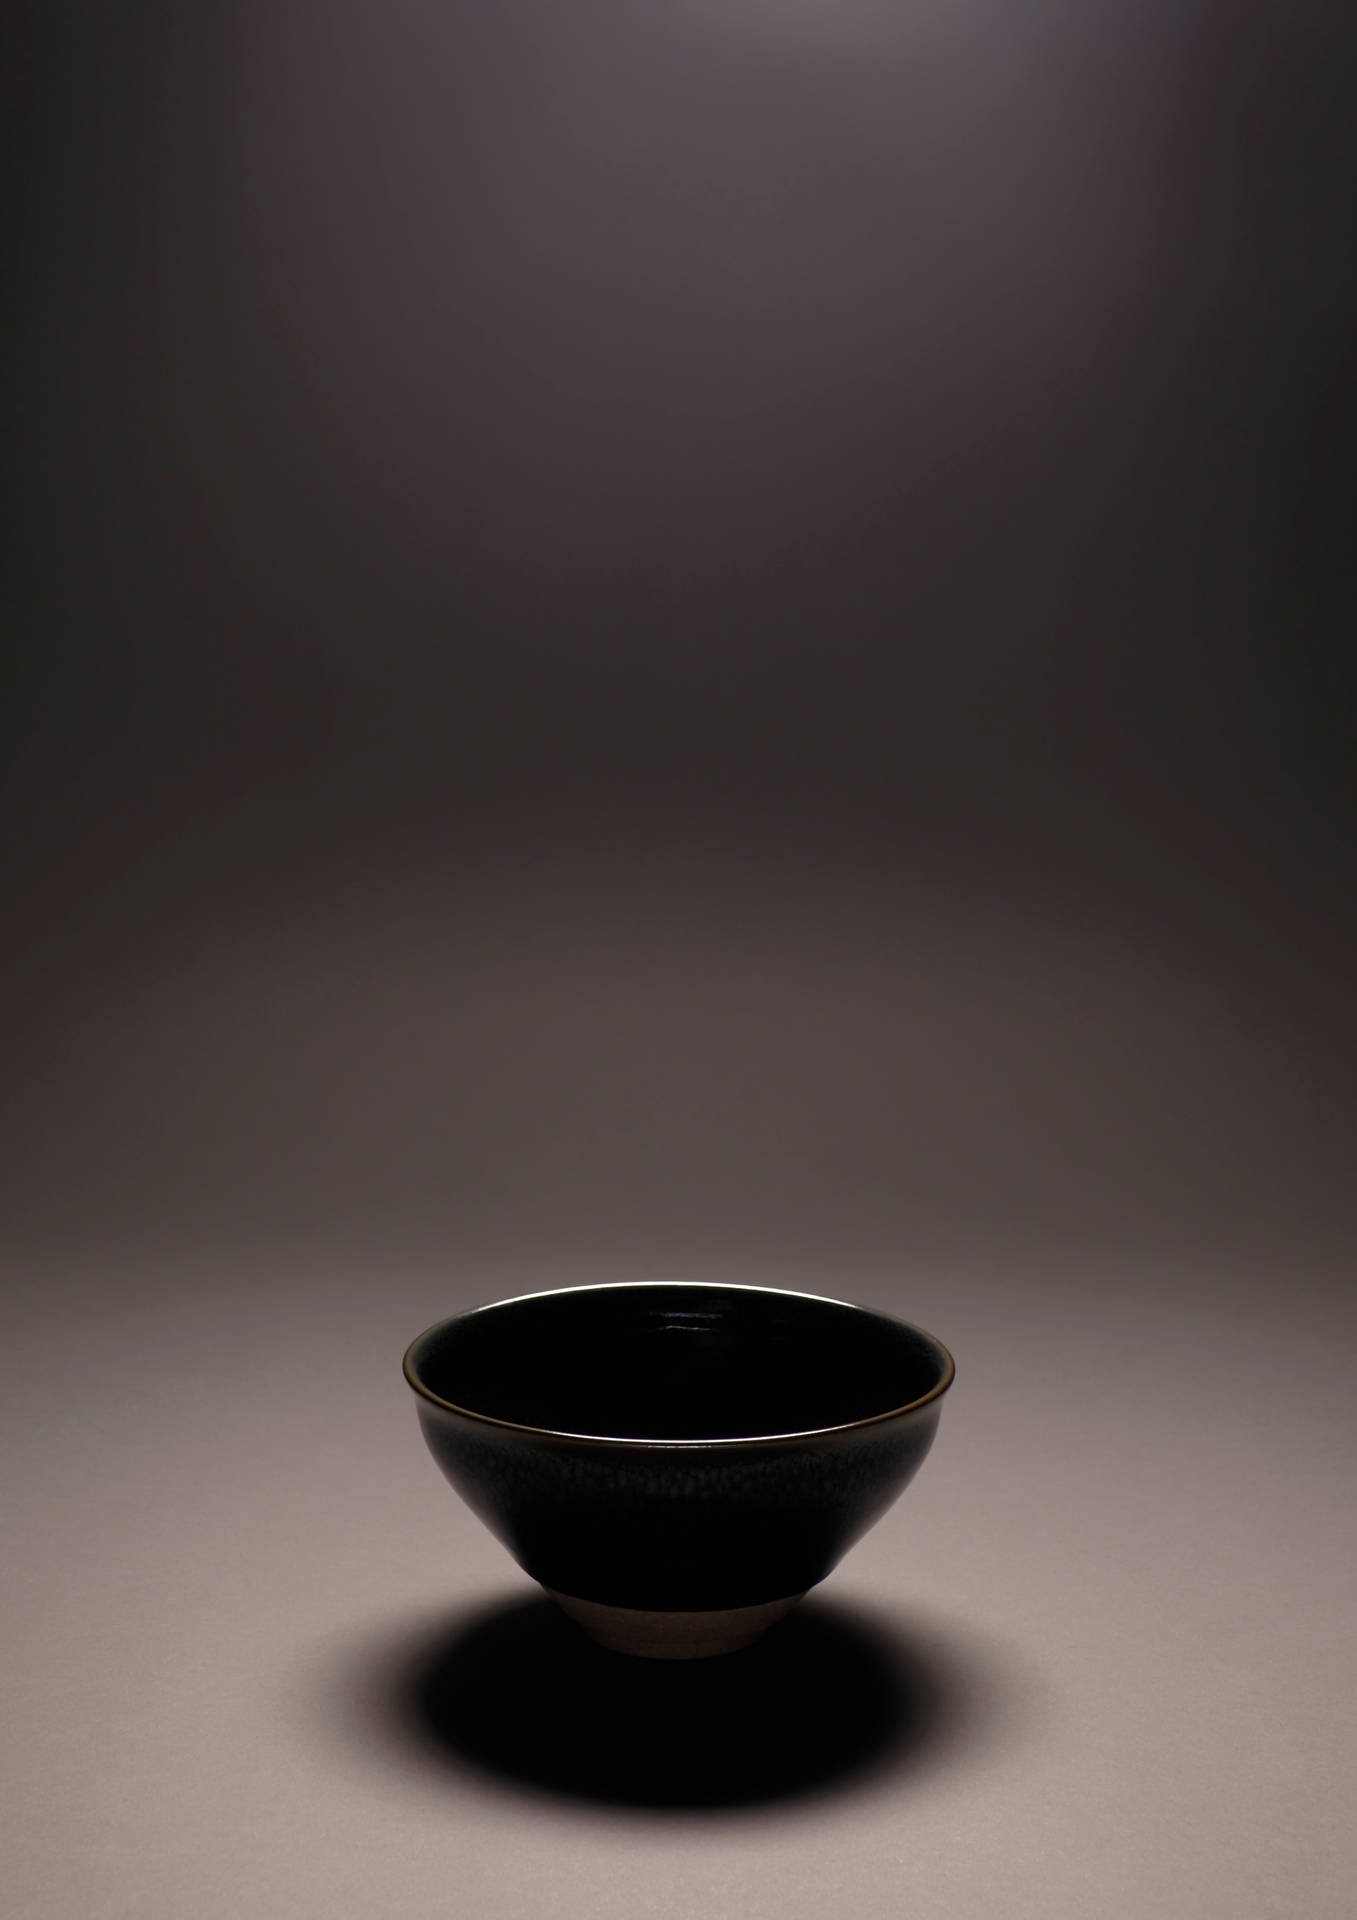 Artistic Black Bowl Silhouette Wallpaper